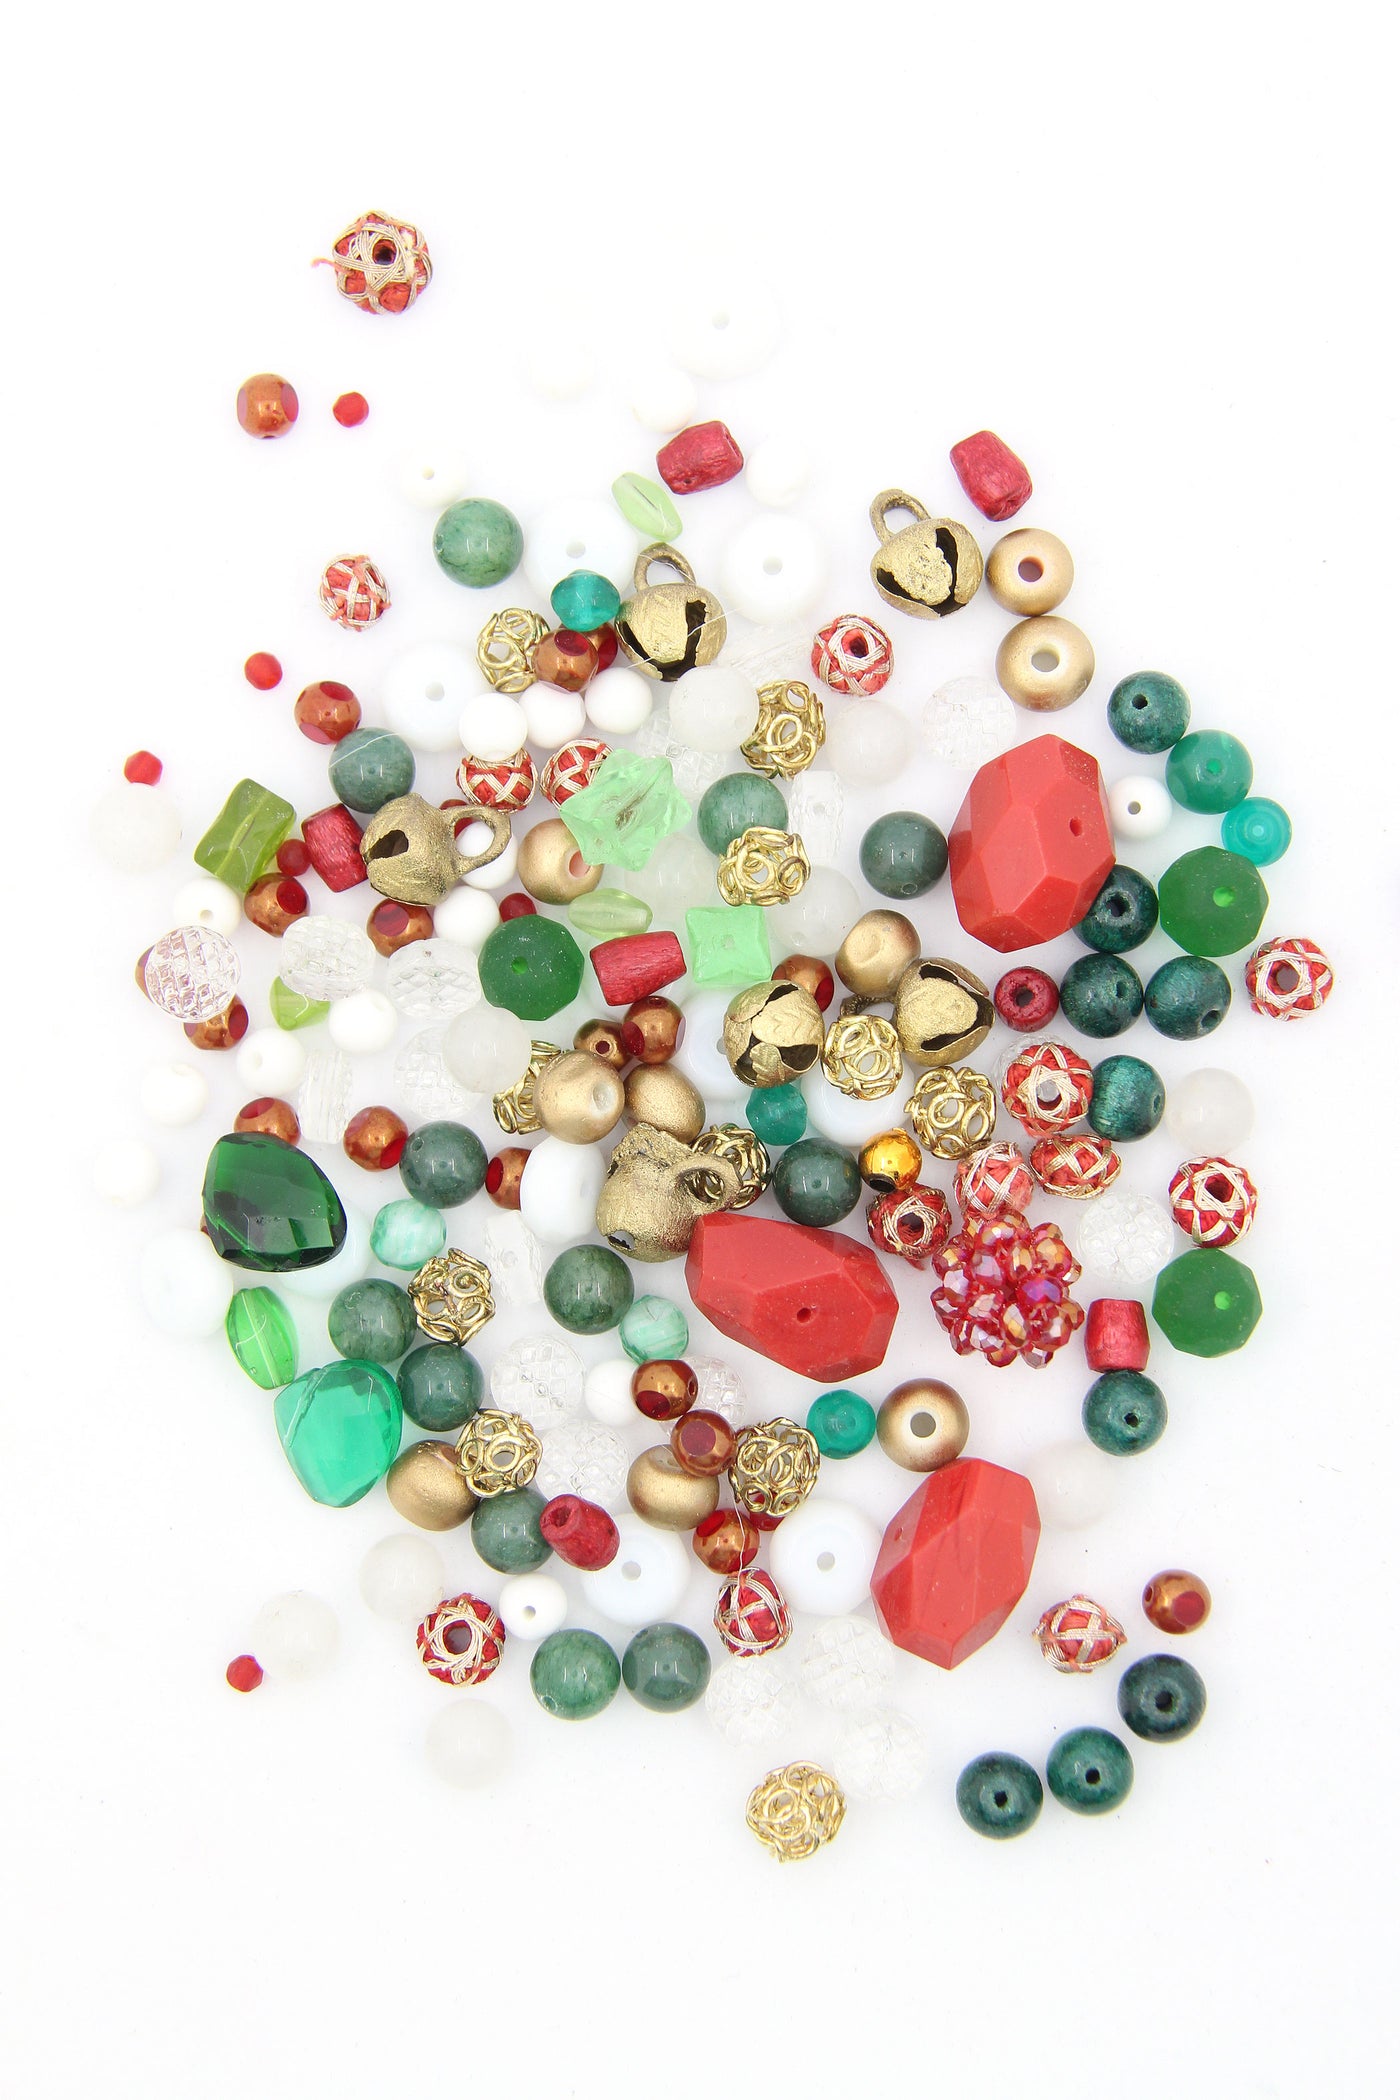 Christmas Bead Grab Bag, Red, Green, White, Gold, Brass Bells, 125+ beads.